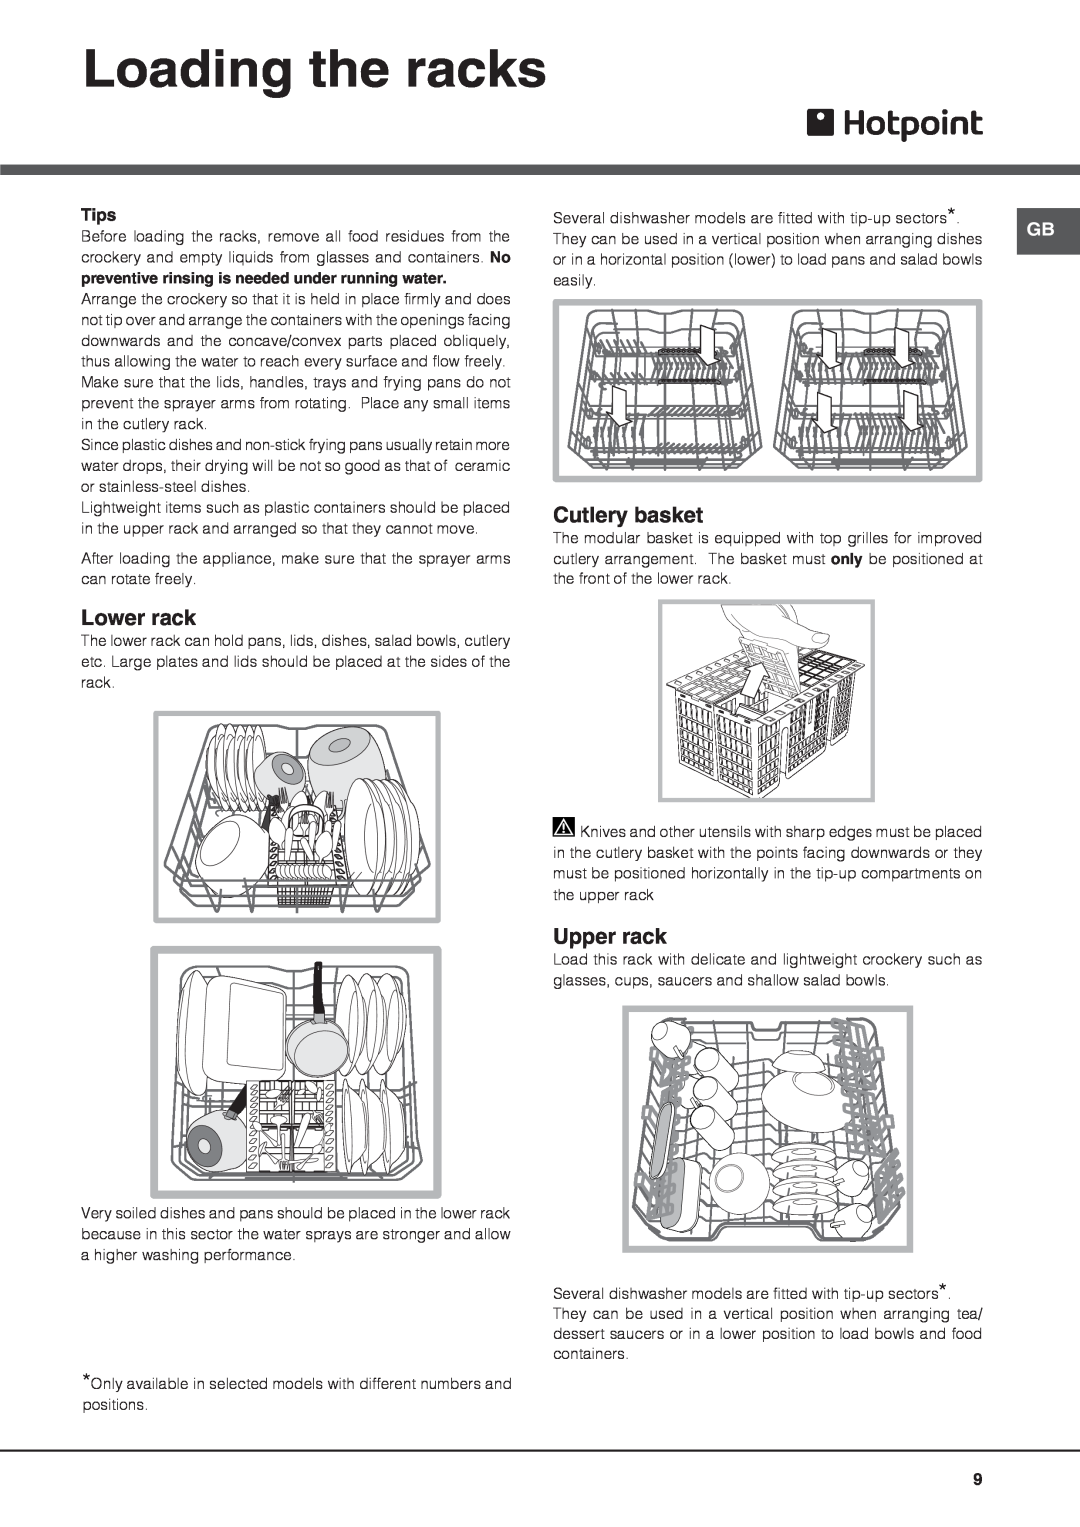 Hotpoint FDEF 33121 manual Loading the racks, Cutlery basket, Lower rack, Upper rack, Tips 